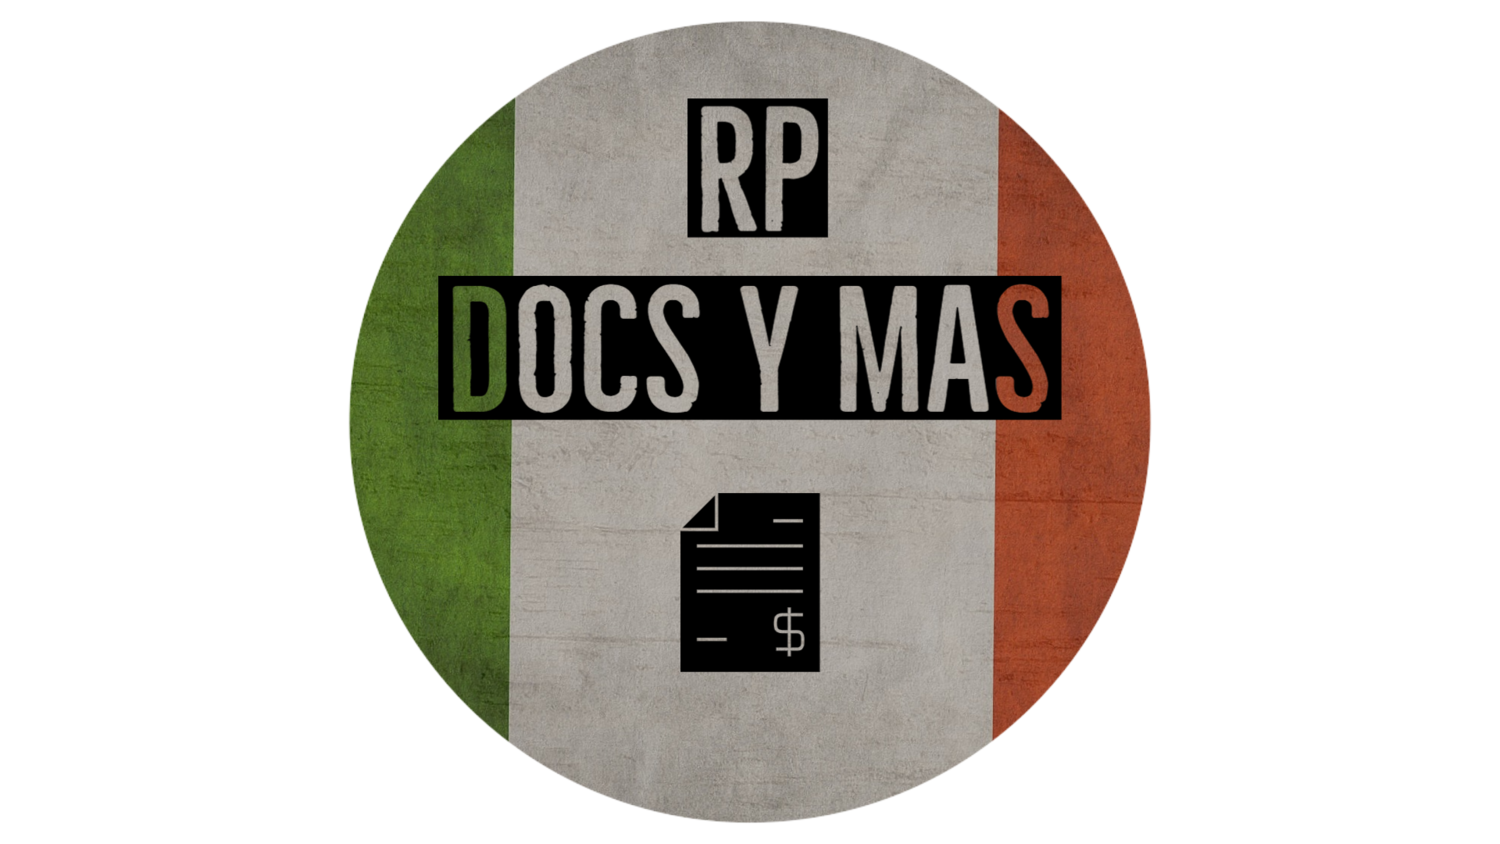 RP Docs y Mas